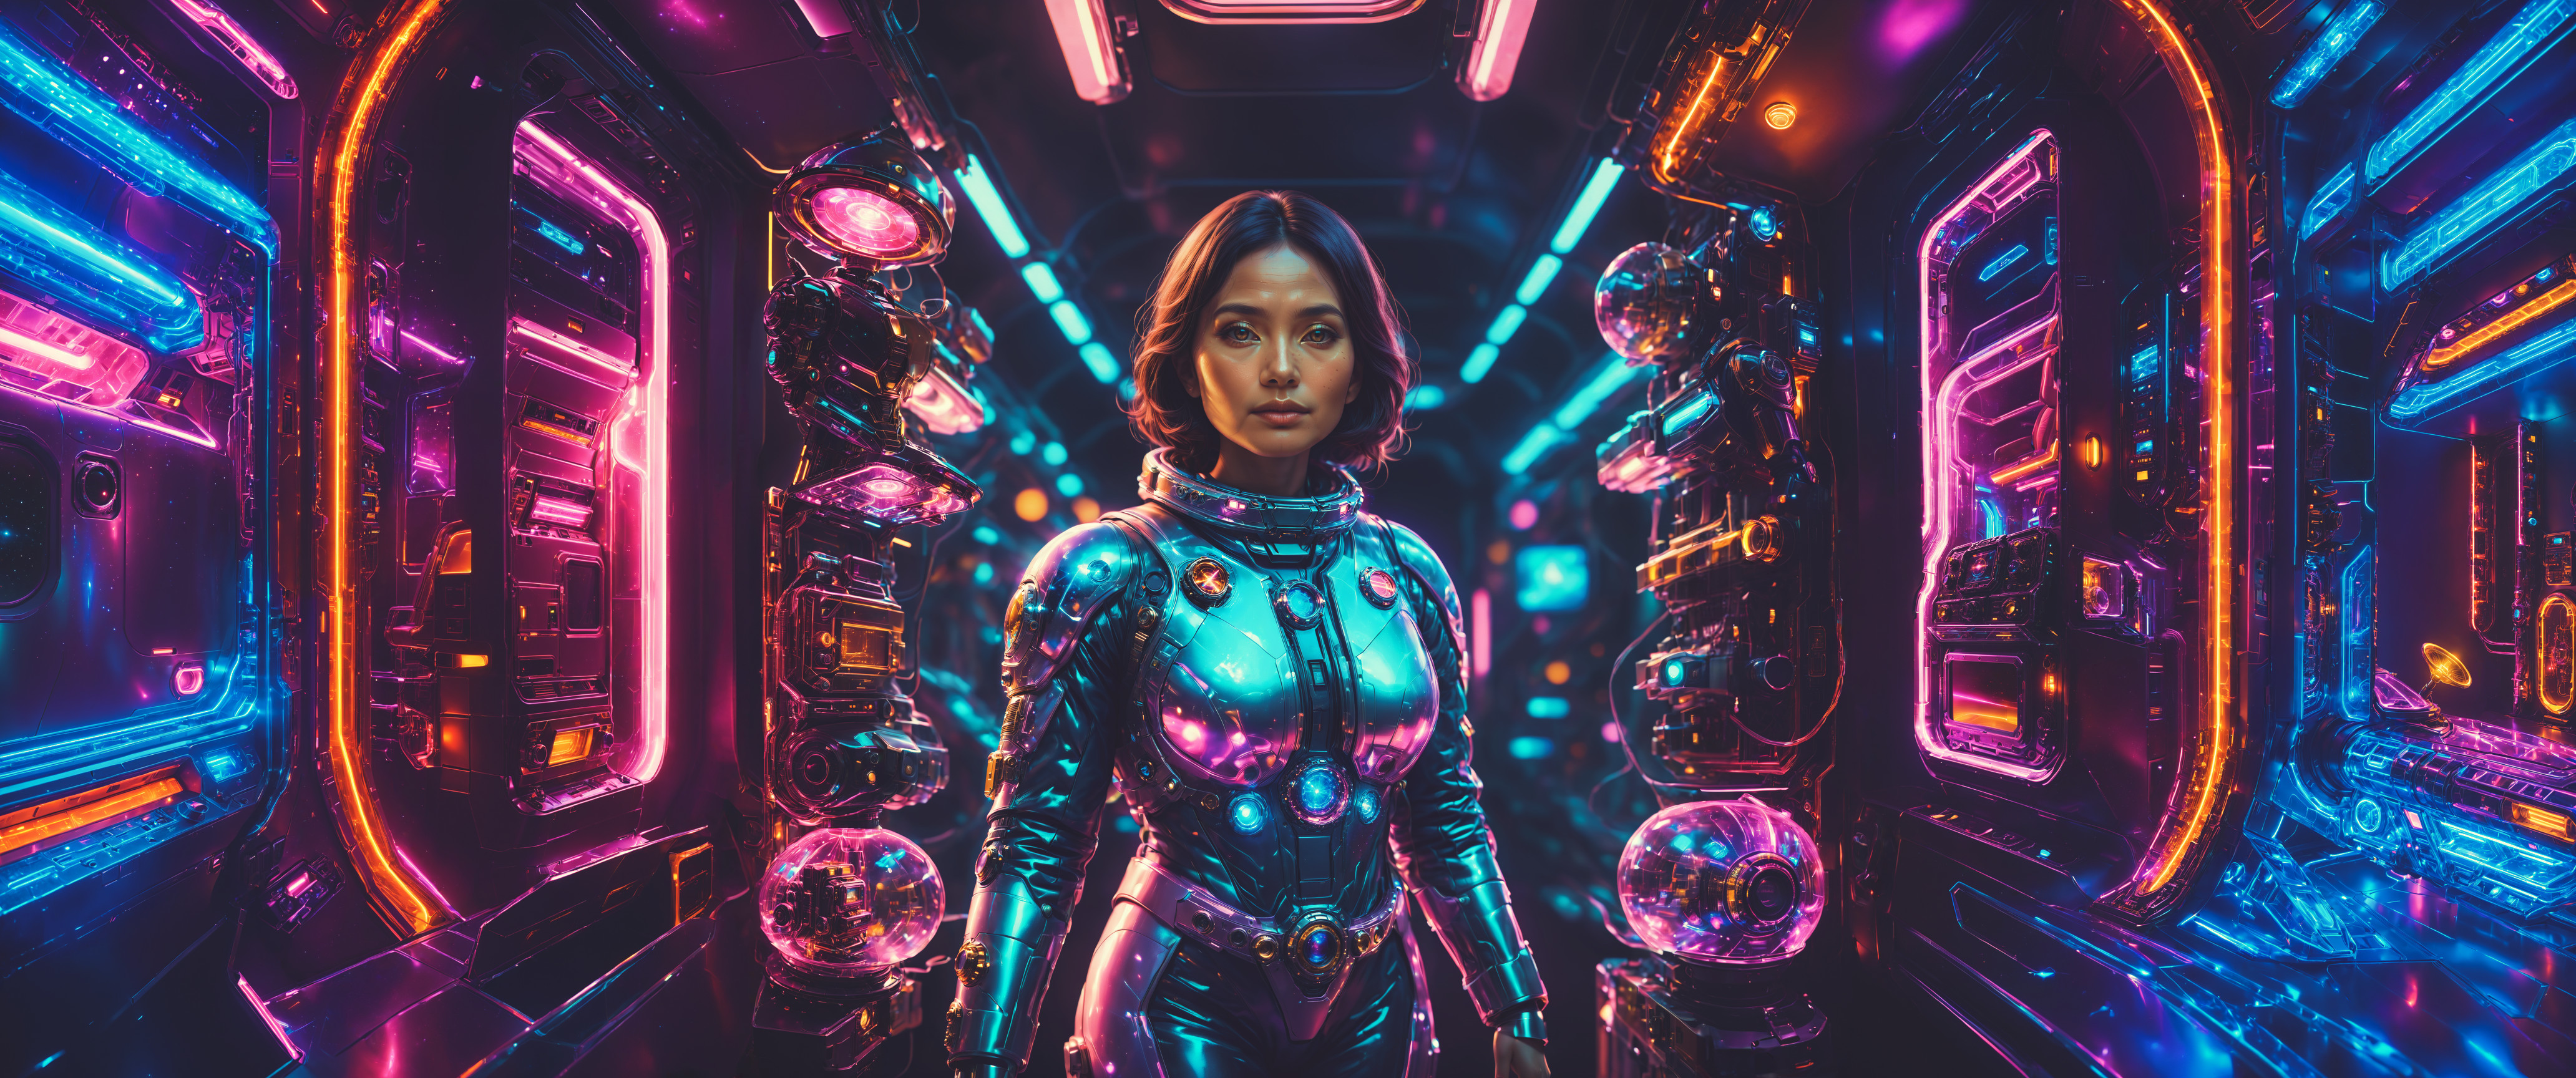 General 4128x1728 AI art ultrawide science fiction science fiction women spaceship neon astronaut